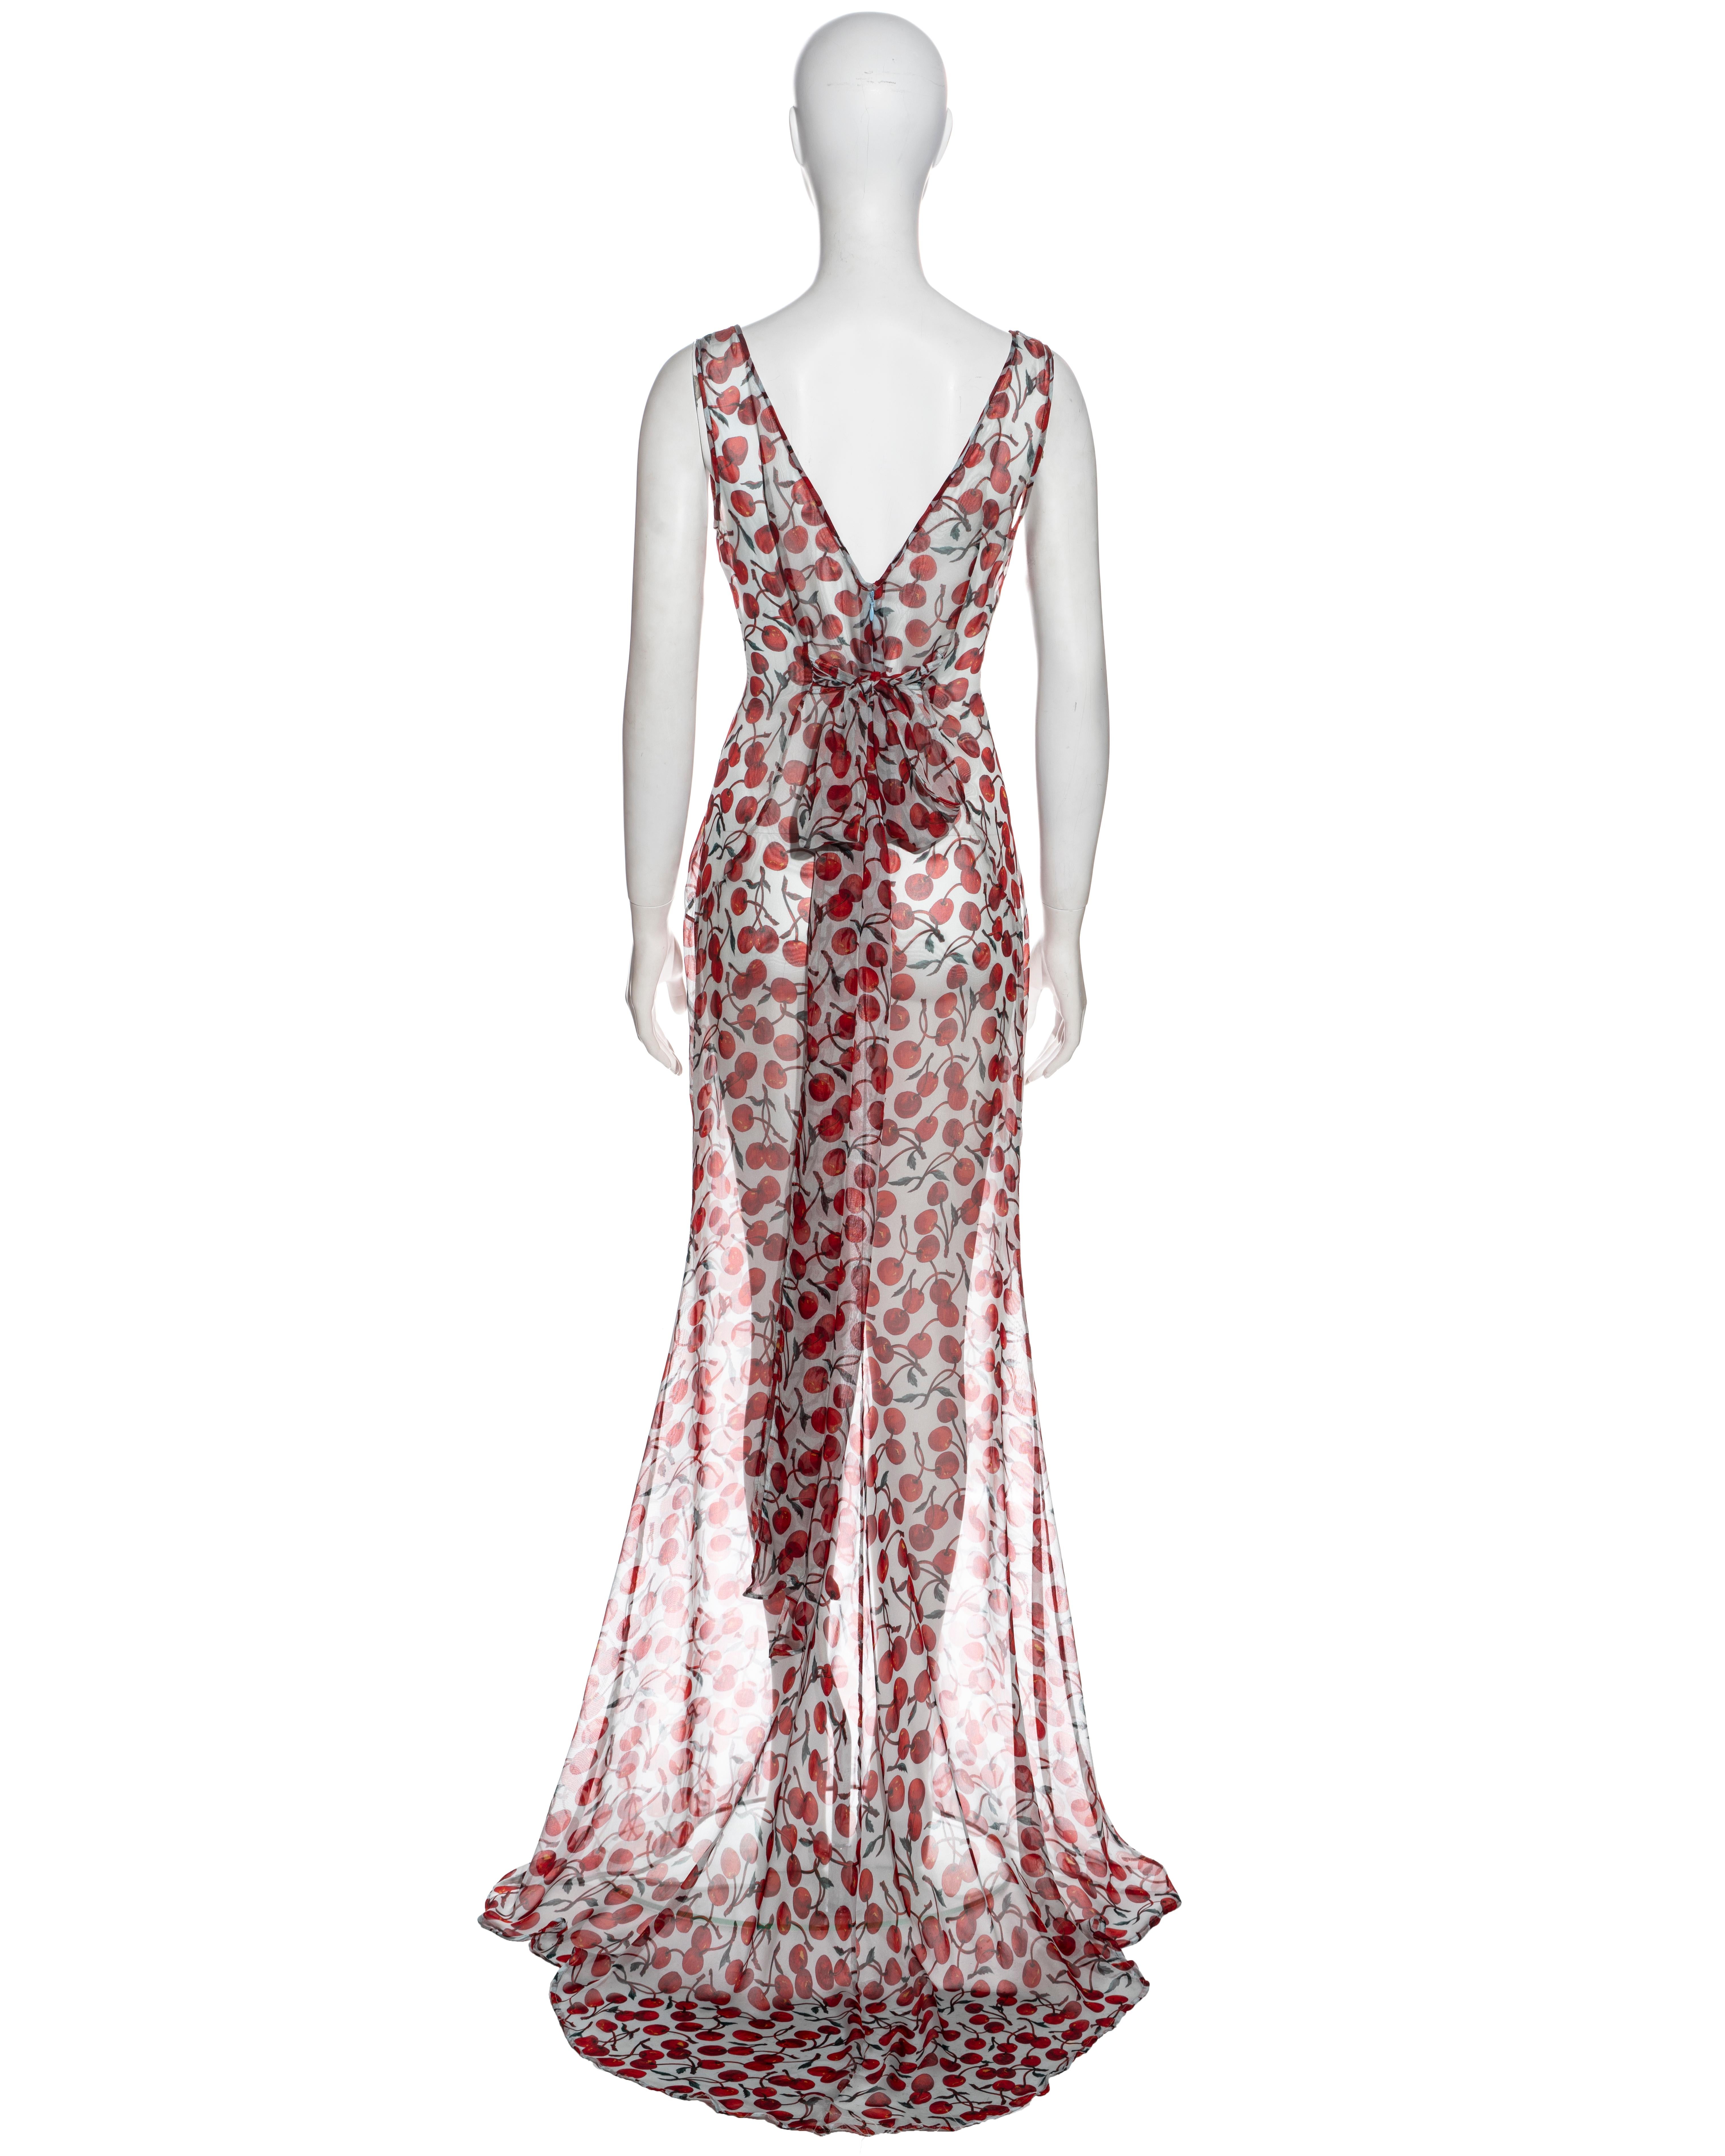 Dolce & Gabbana cherry print silk chiffon evening dress with train, fw 1996 3